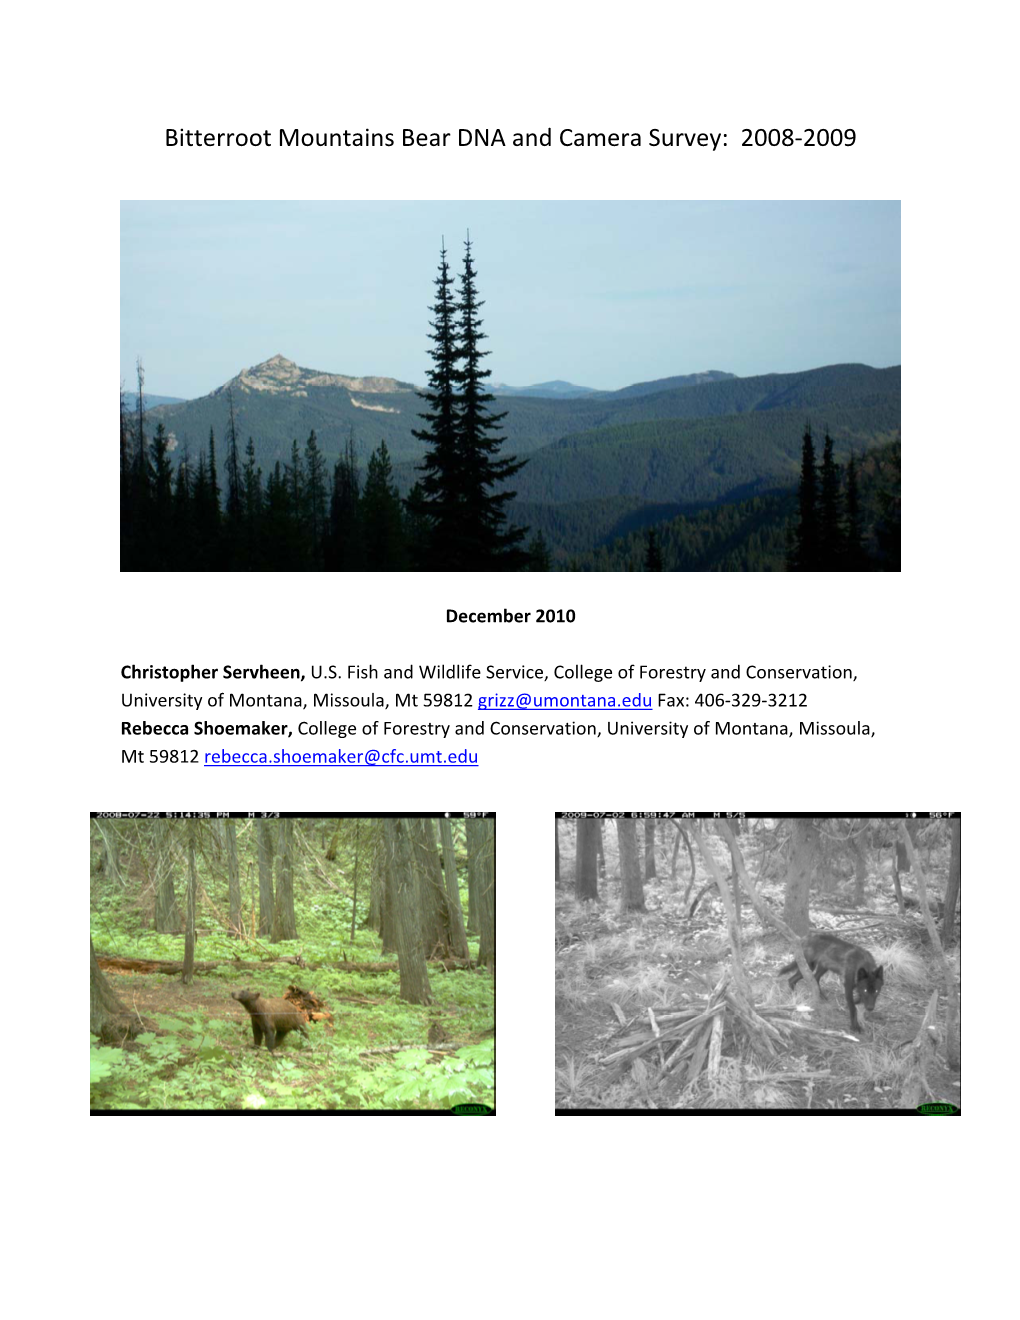 2008 Bitterroot Mountains Bear DNA Survey